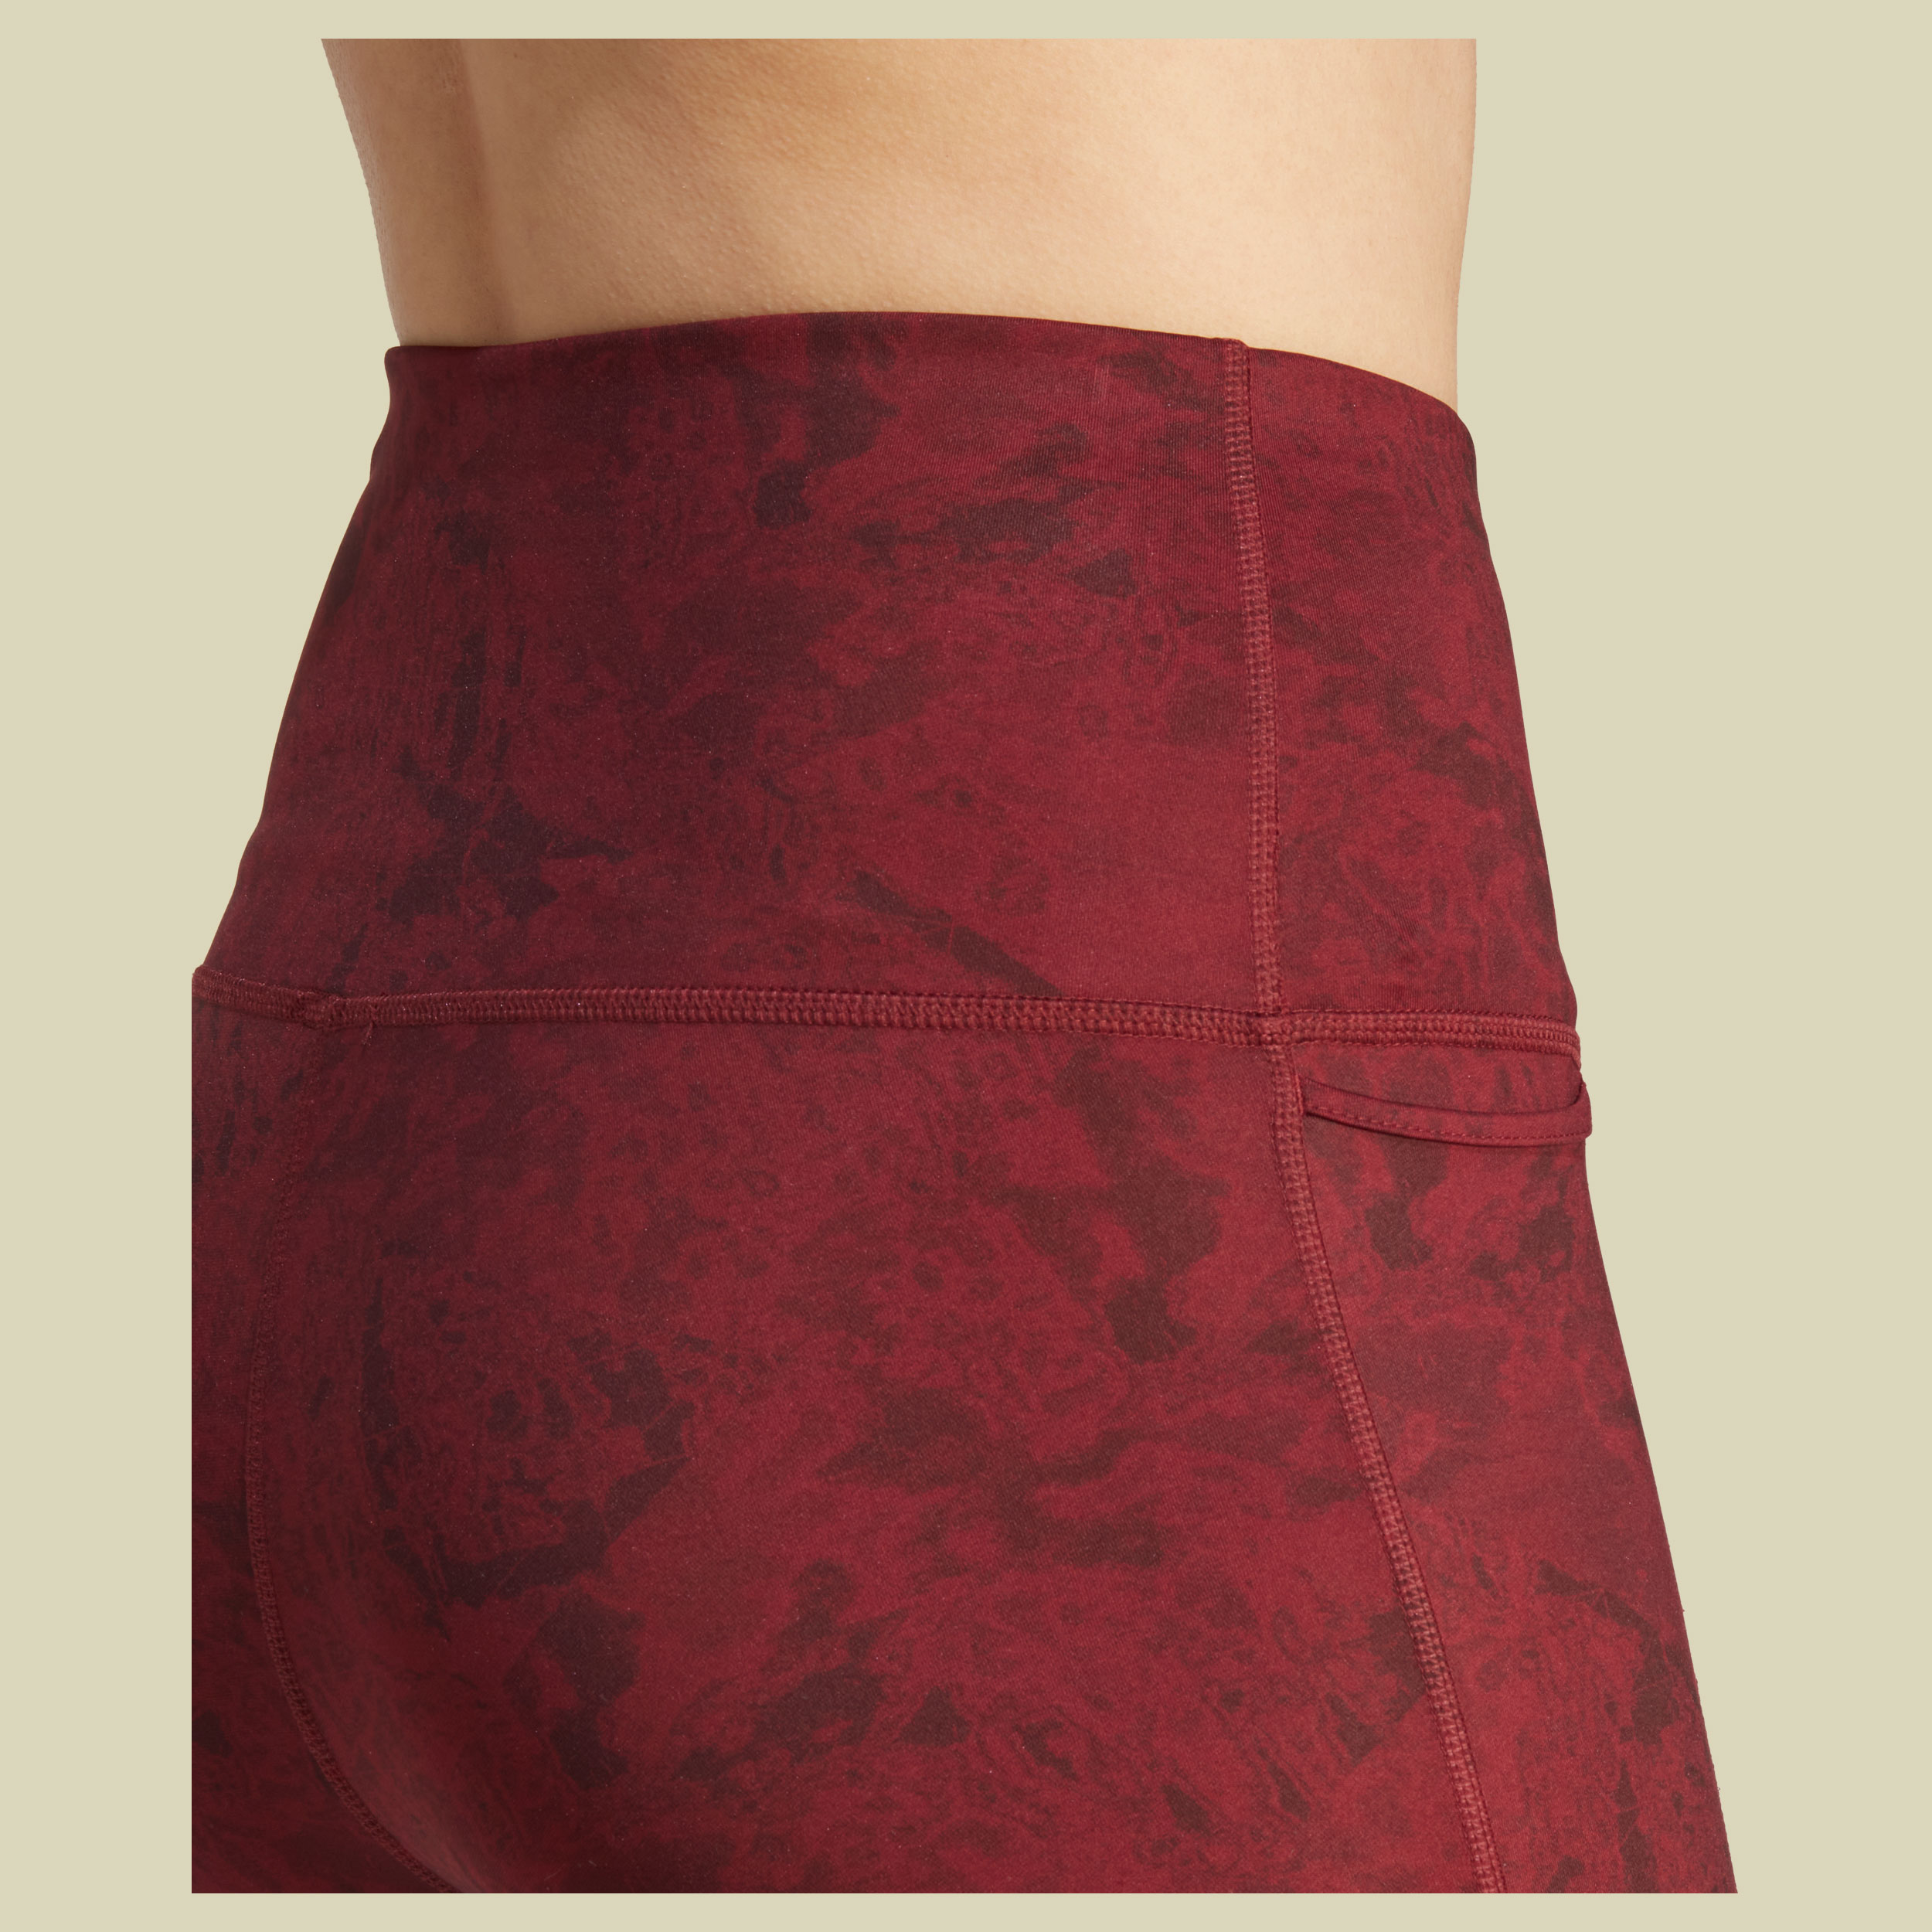 Terrex Multi Allover Print Leggings Women Größe 38 Farbe shadow red